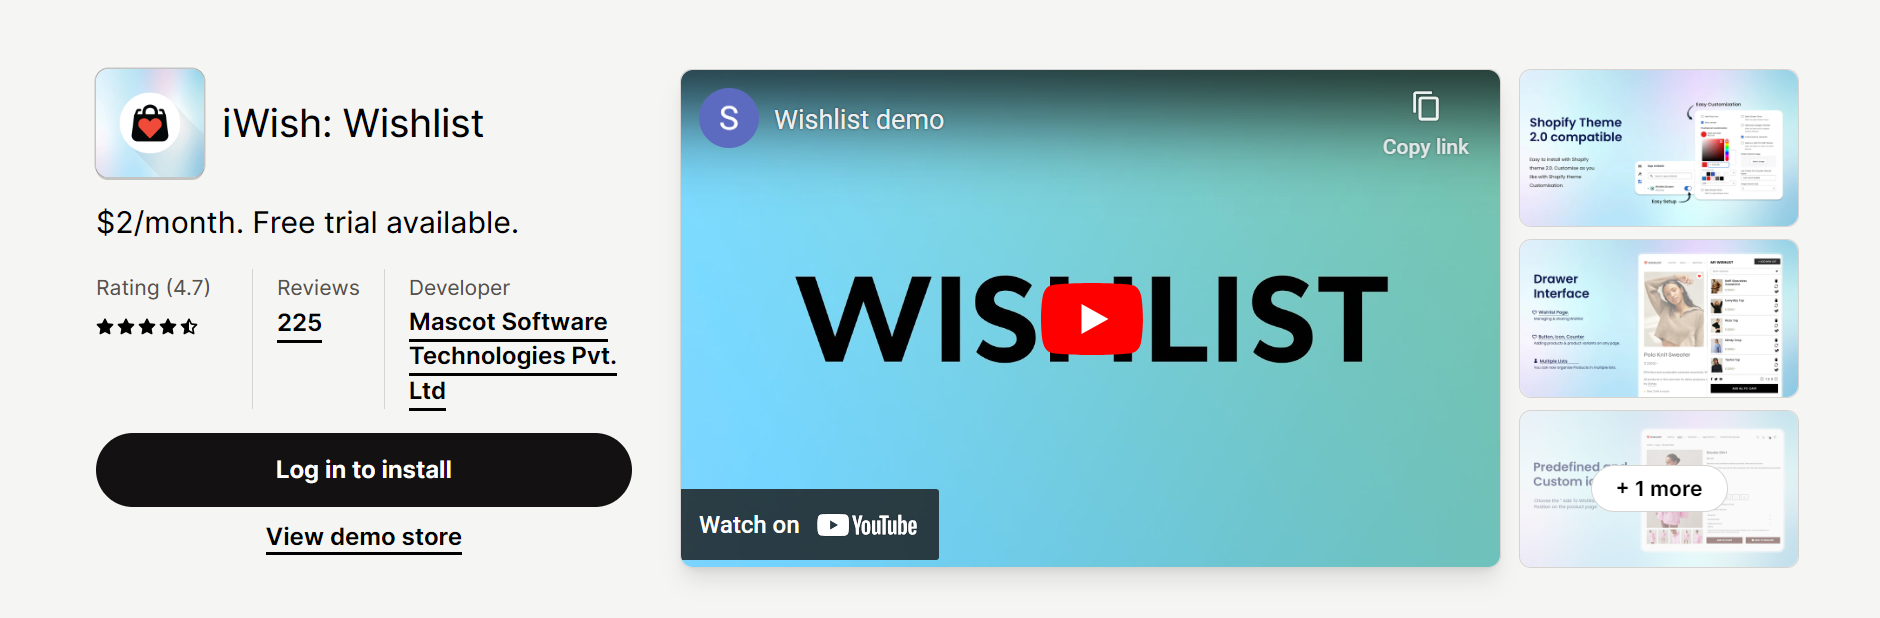 iWish: Wishlist